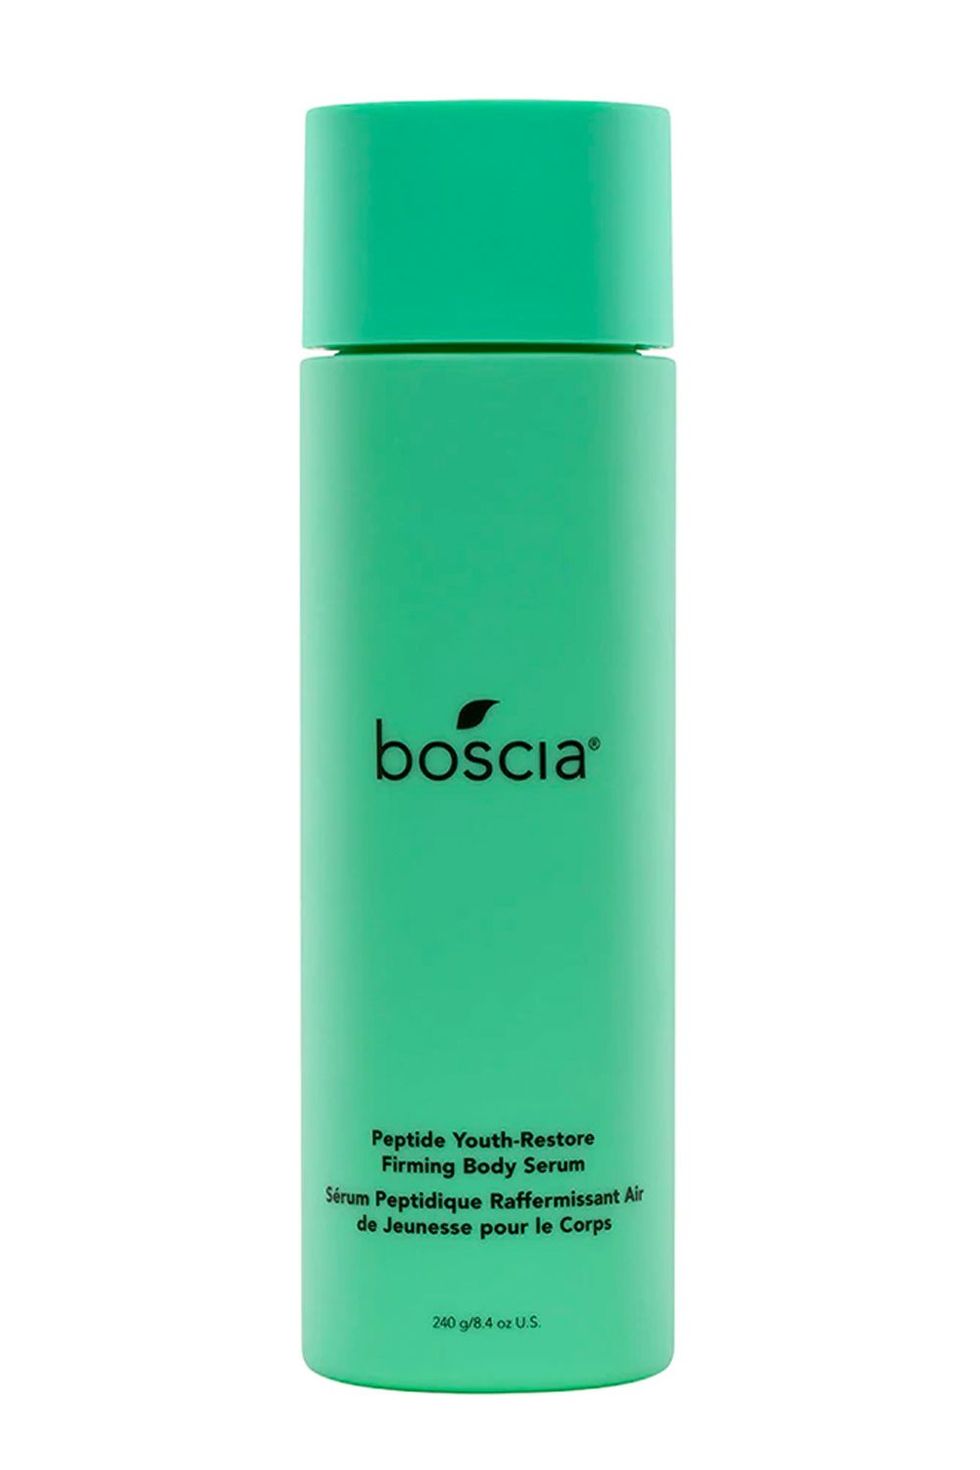 Boscia Peptide Youth-Restore Firming Body Serum